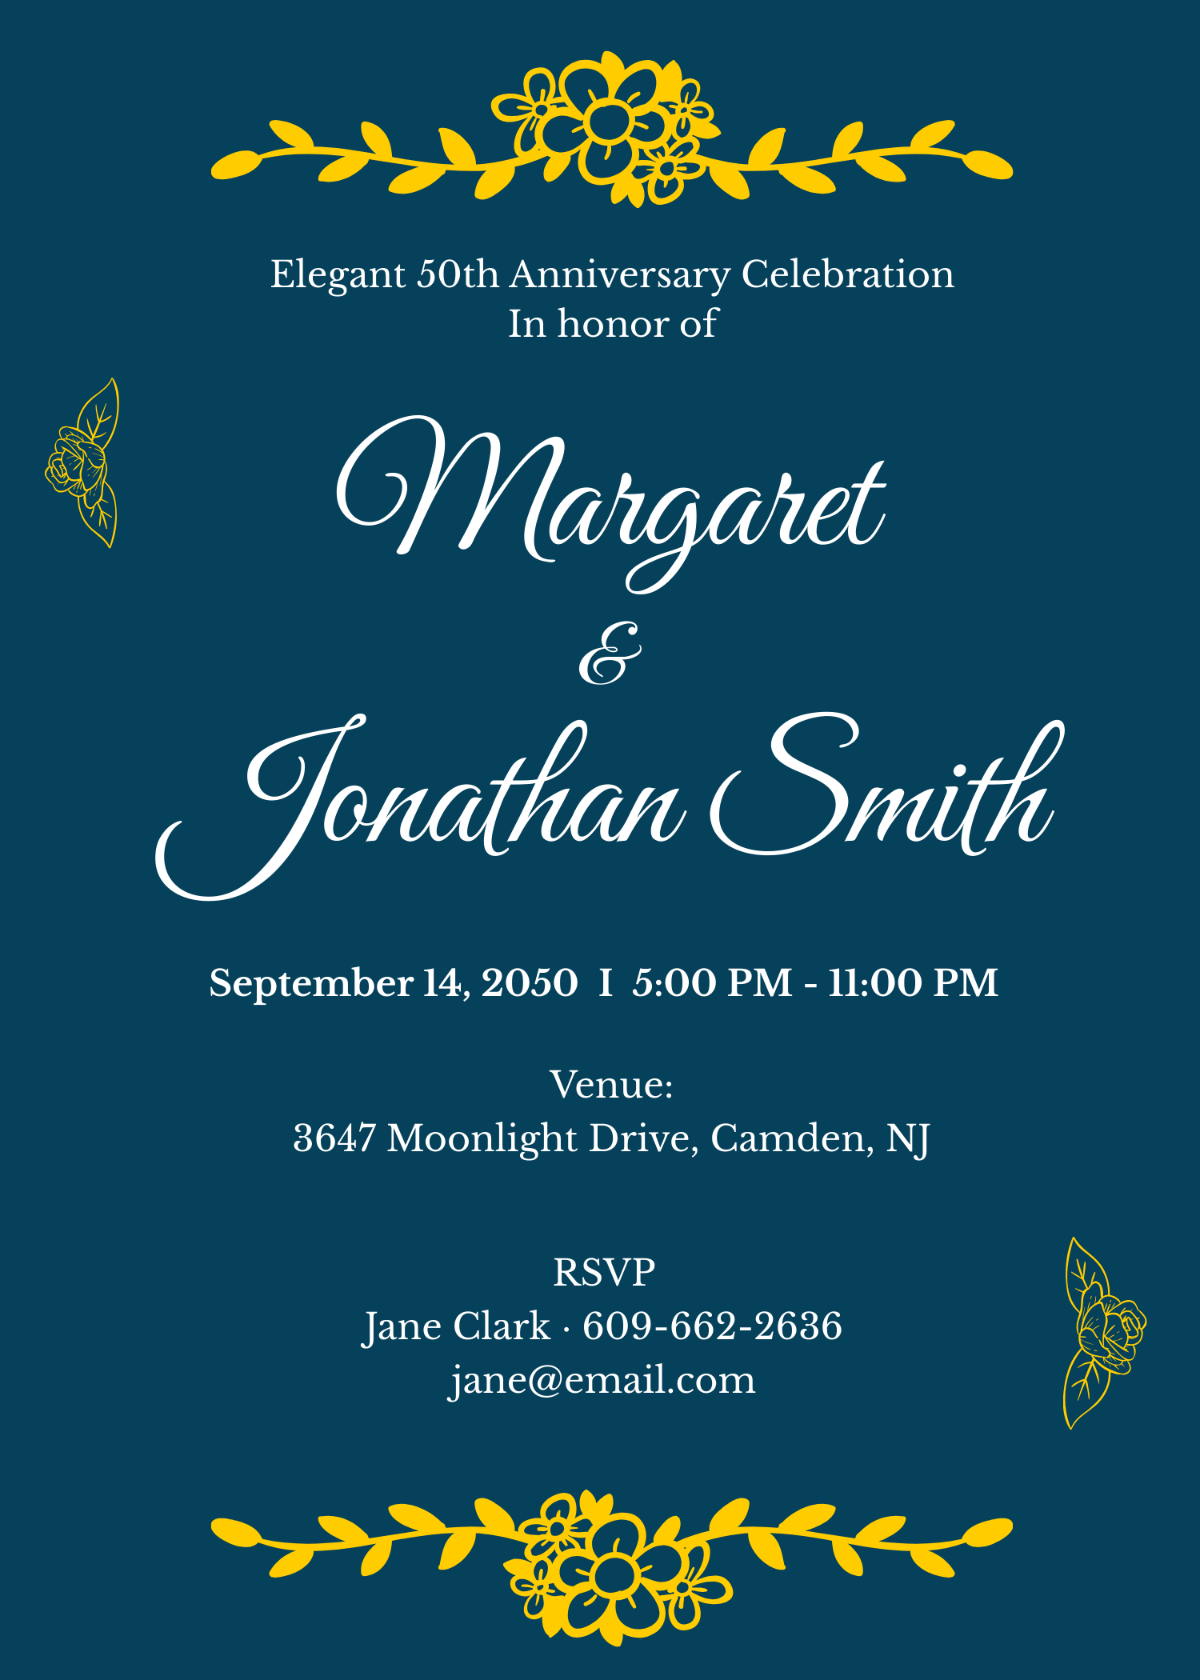 Elegant 50th Anniversary Invitation